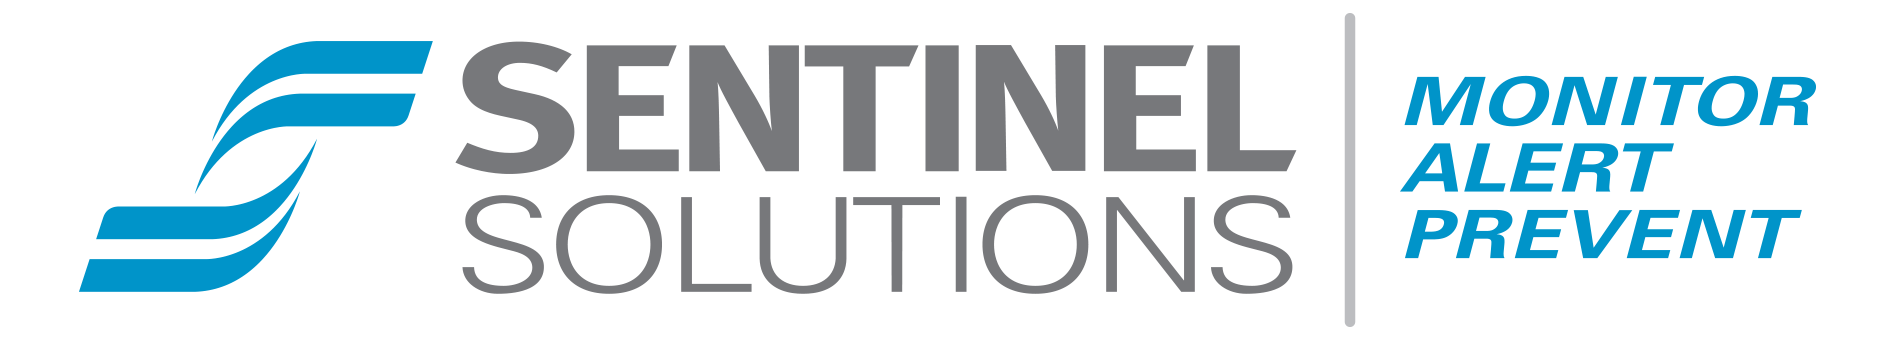 Sentinel Solutions